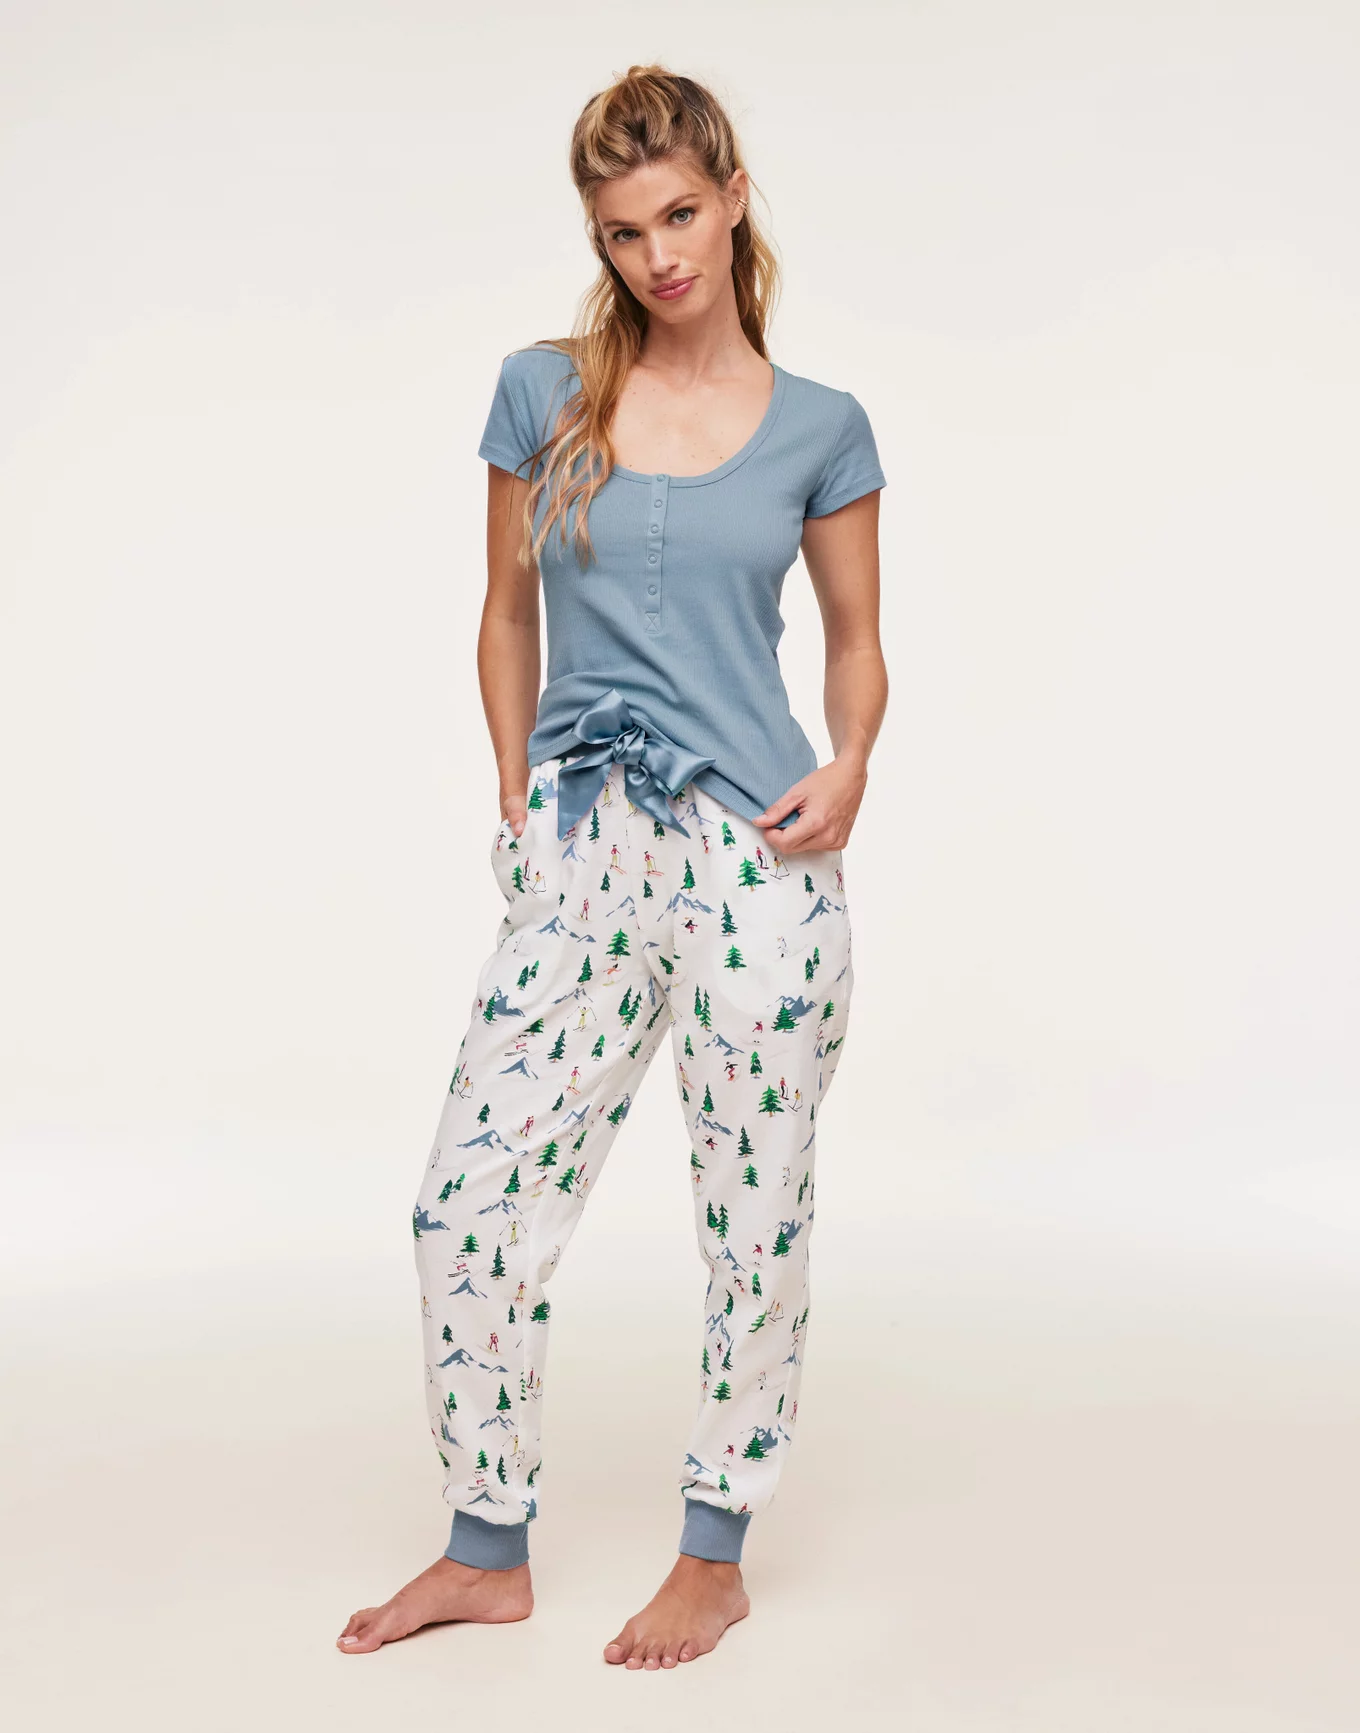 Luck Brand Women's Pajama Set XXL Includes 4 pieces Tee, Tank